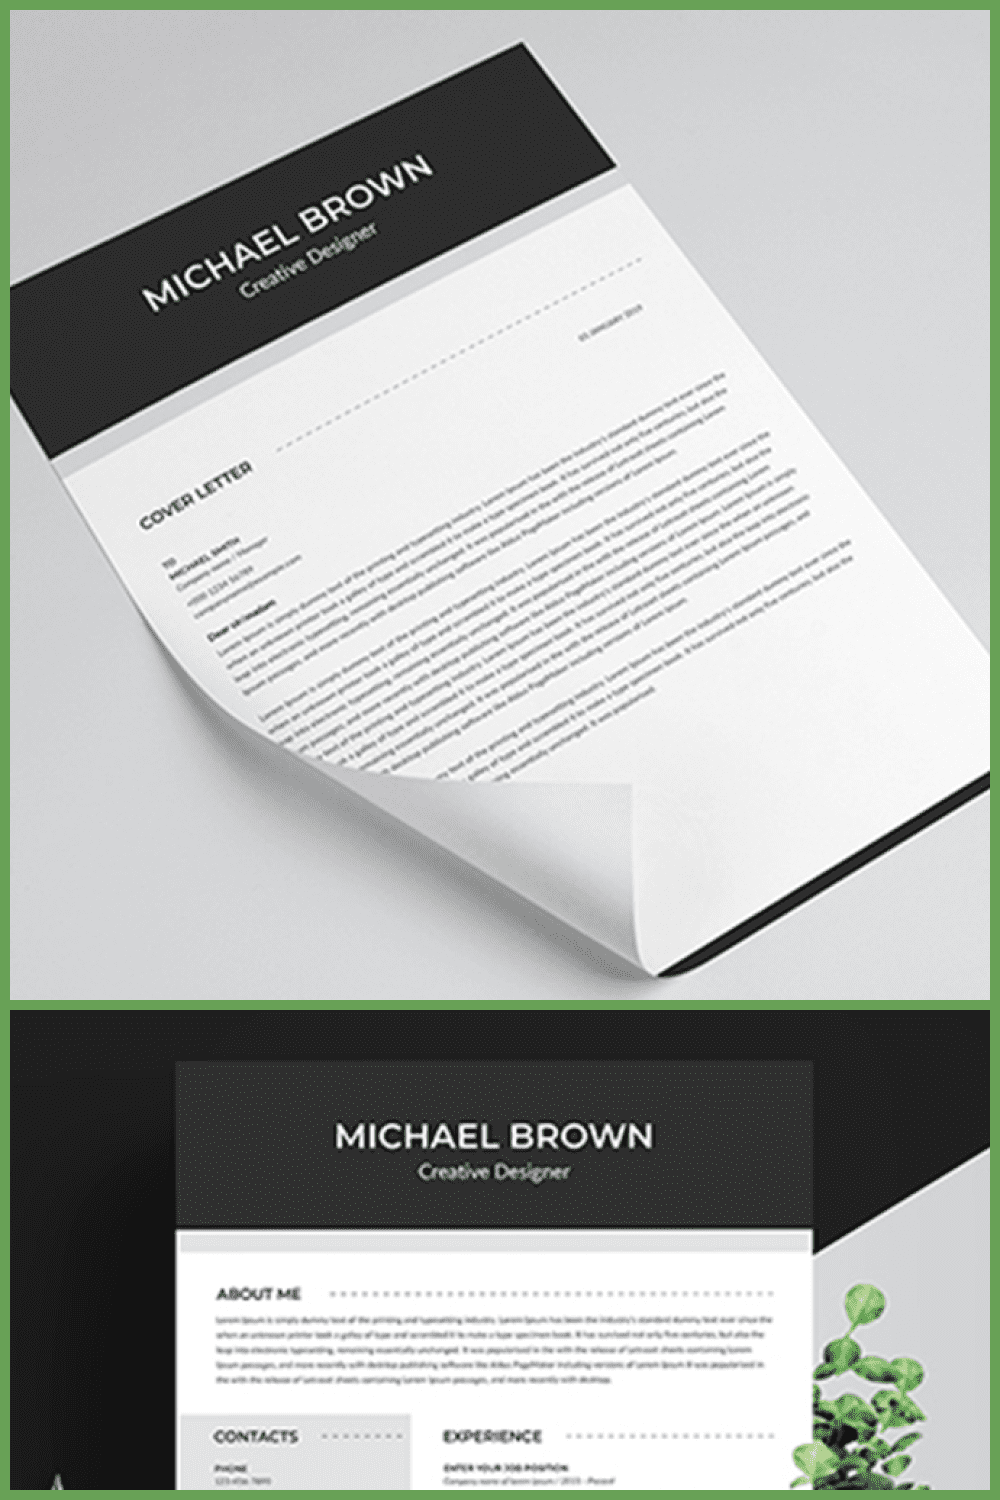 Basic Resume Template - MasterBundles - Pinterest Collage Image.